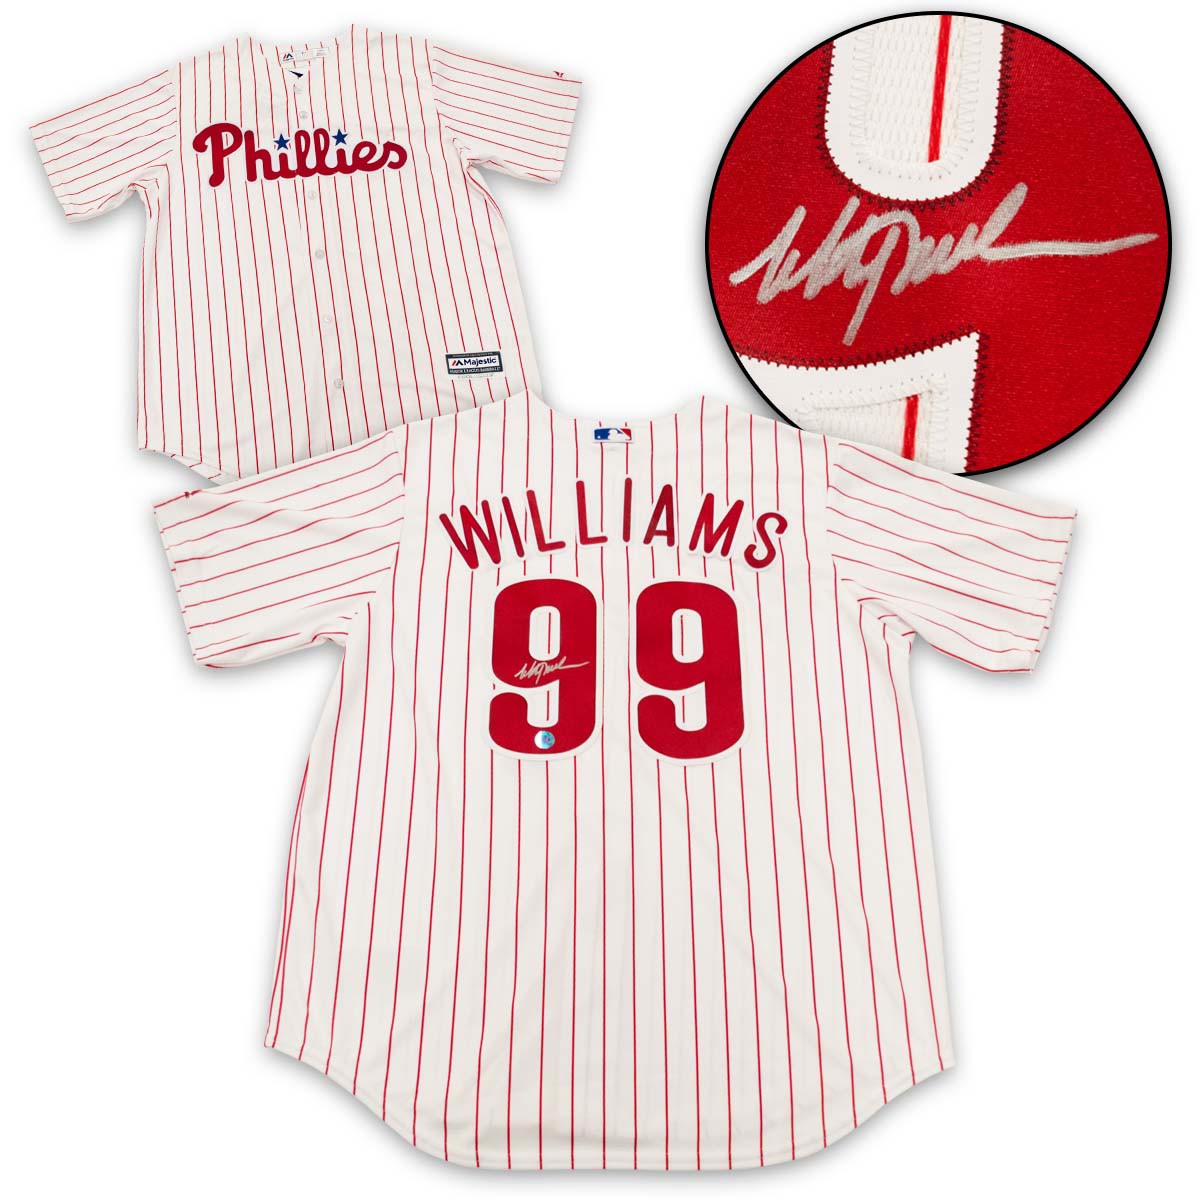 Mitch Williams autographed Baseball Card (Philadelphia Phillies